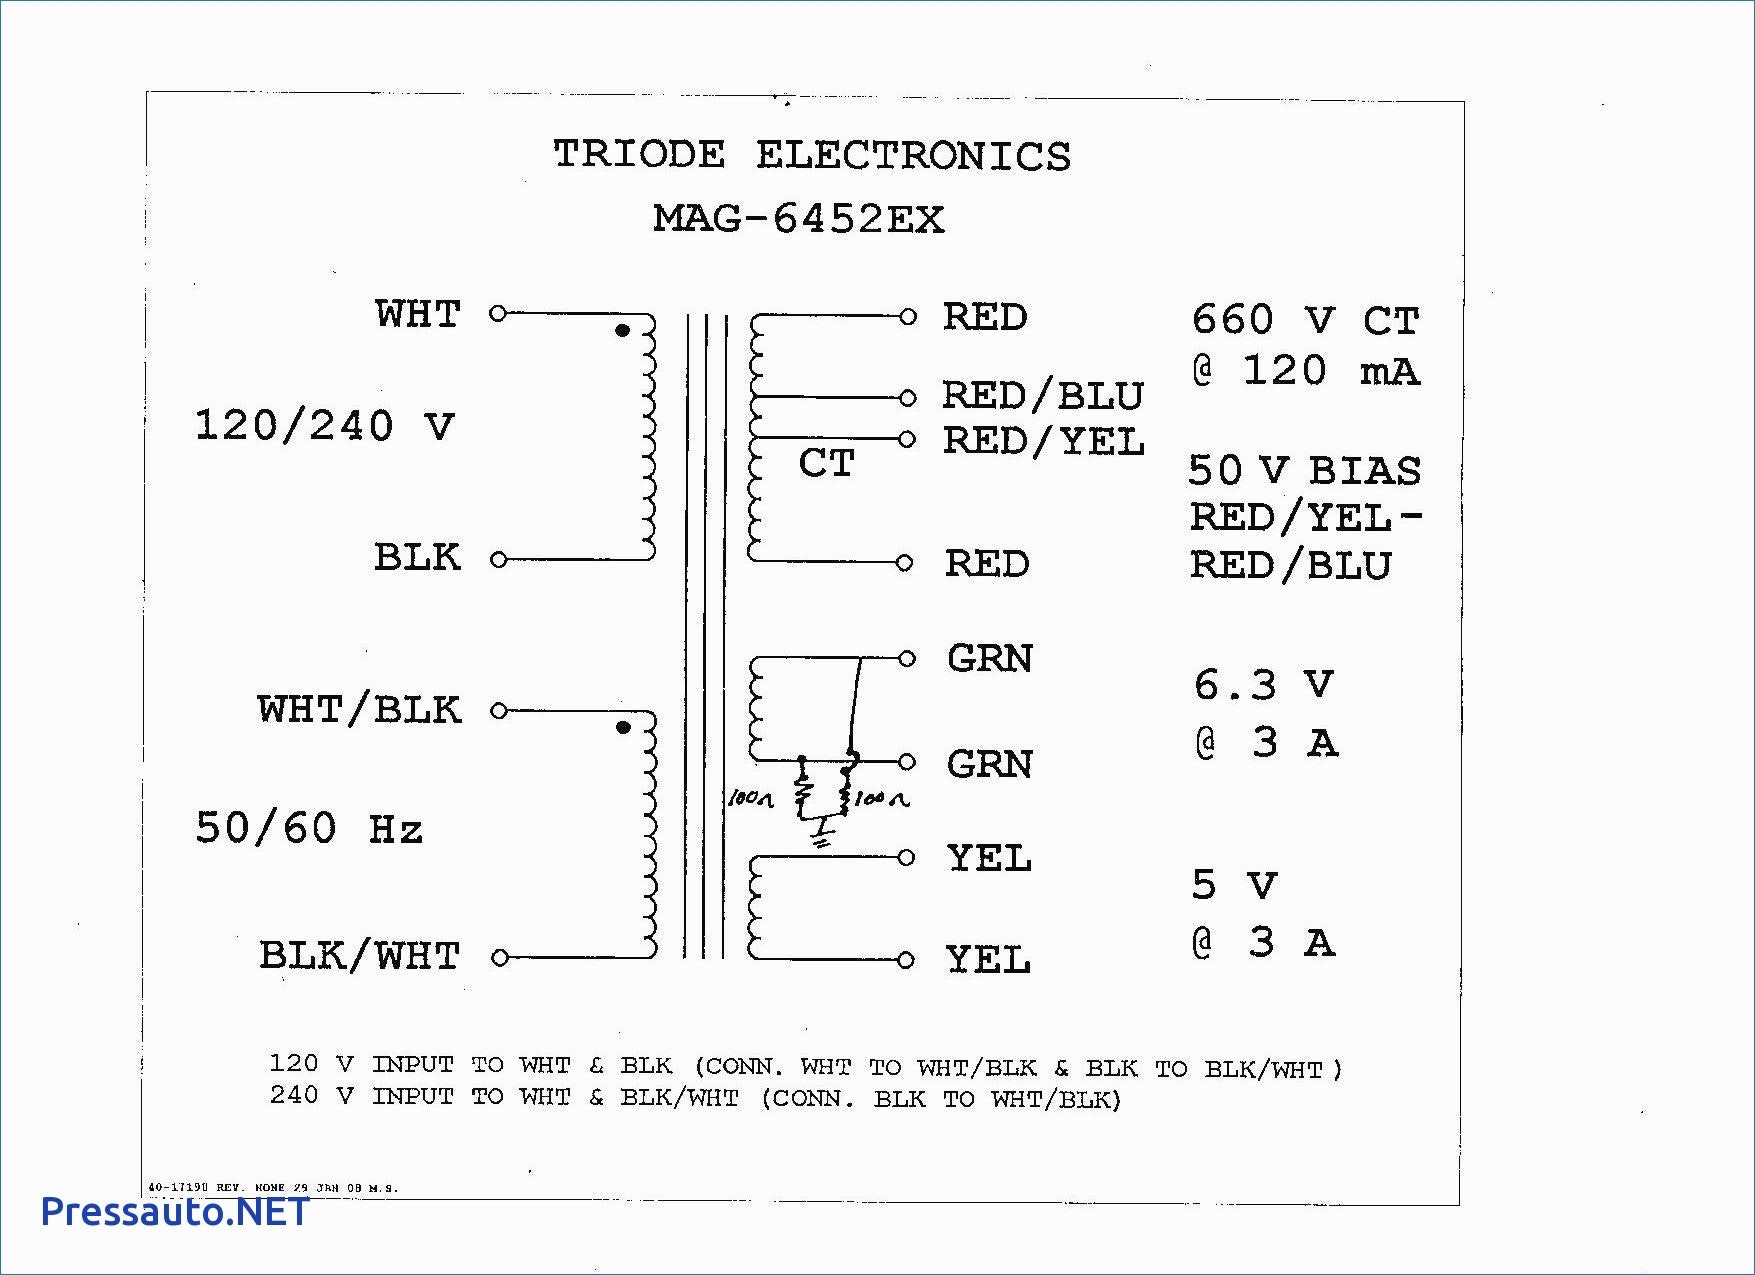 480 Volt to 120 Volt Transformer Wiring Diagram 480v to 240v Transformer Wiring Diagram 240v